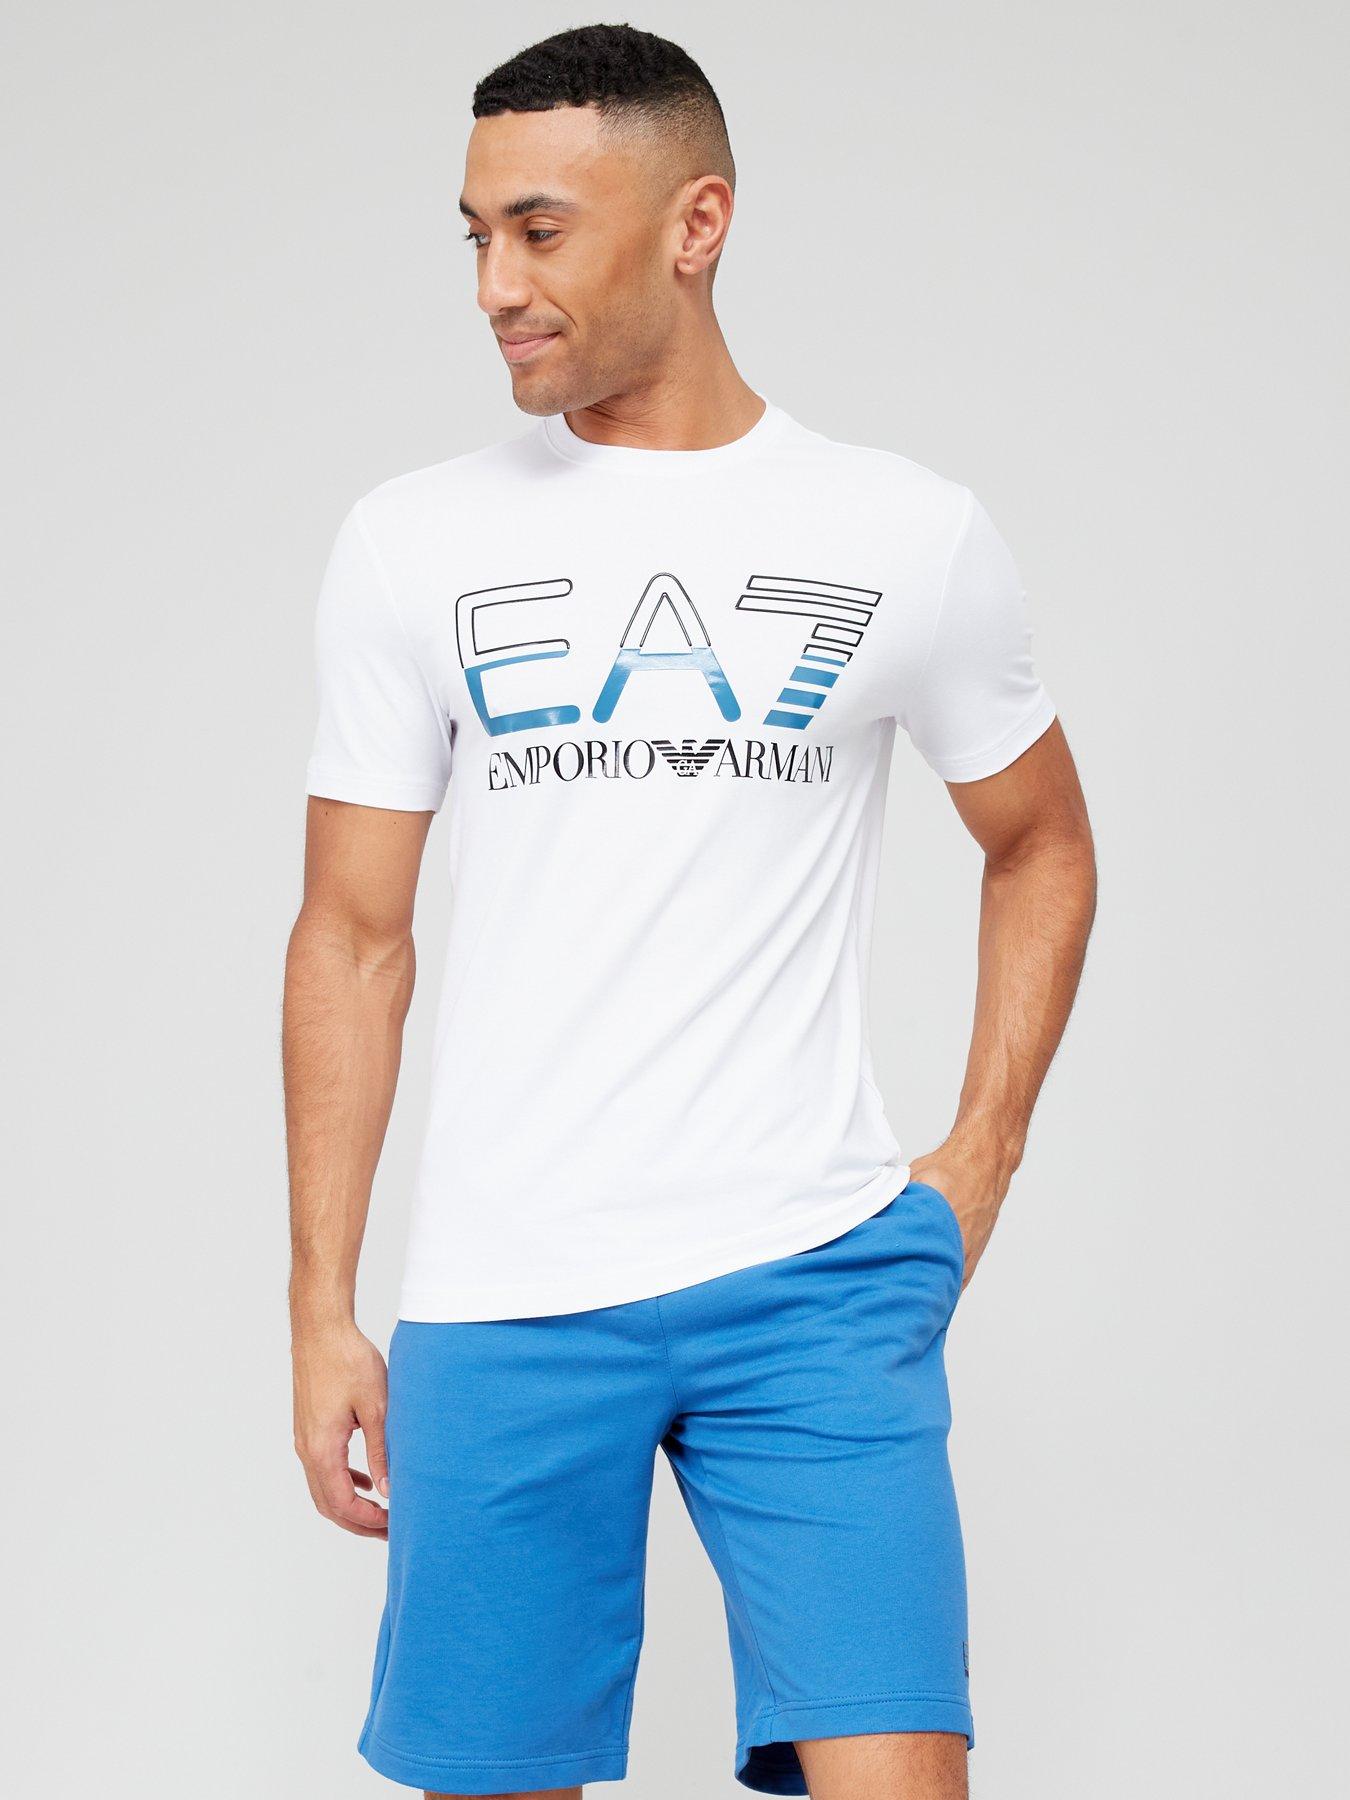 Ea7 emporio armani | T-shirts & polos | Men 